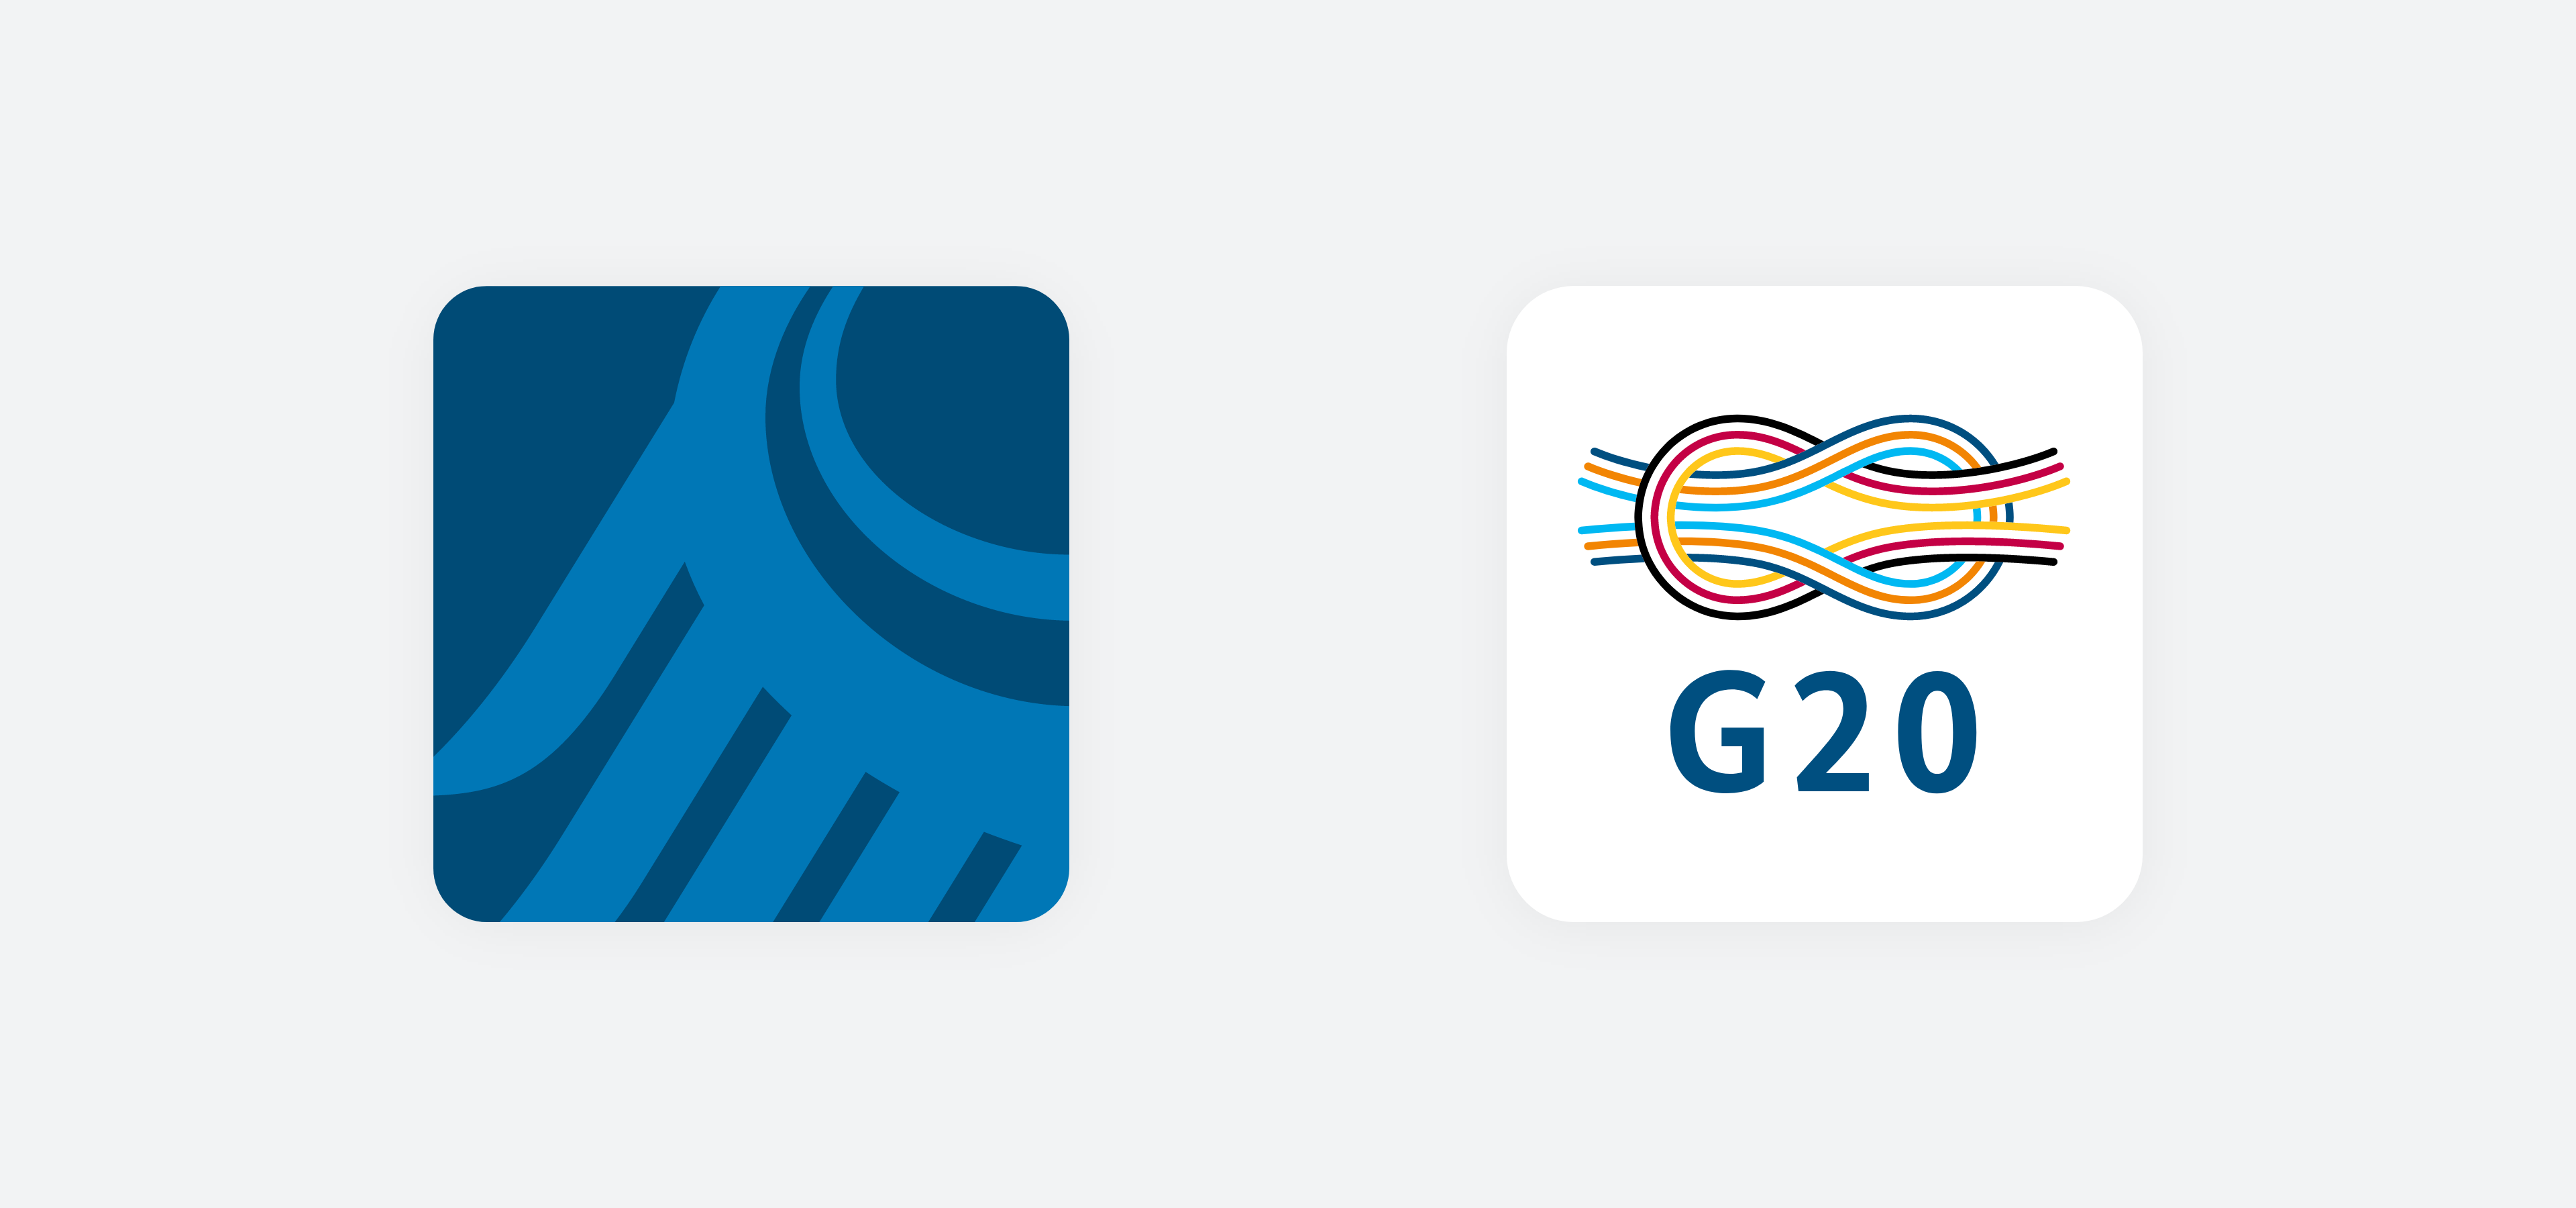 Hallo Politik: Adlerschwinge, G20: Bildwortmarke G20 